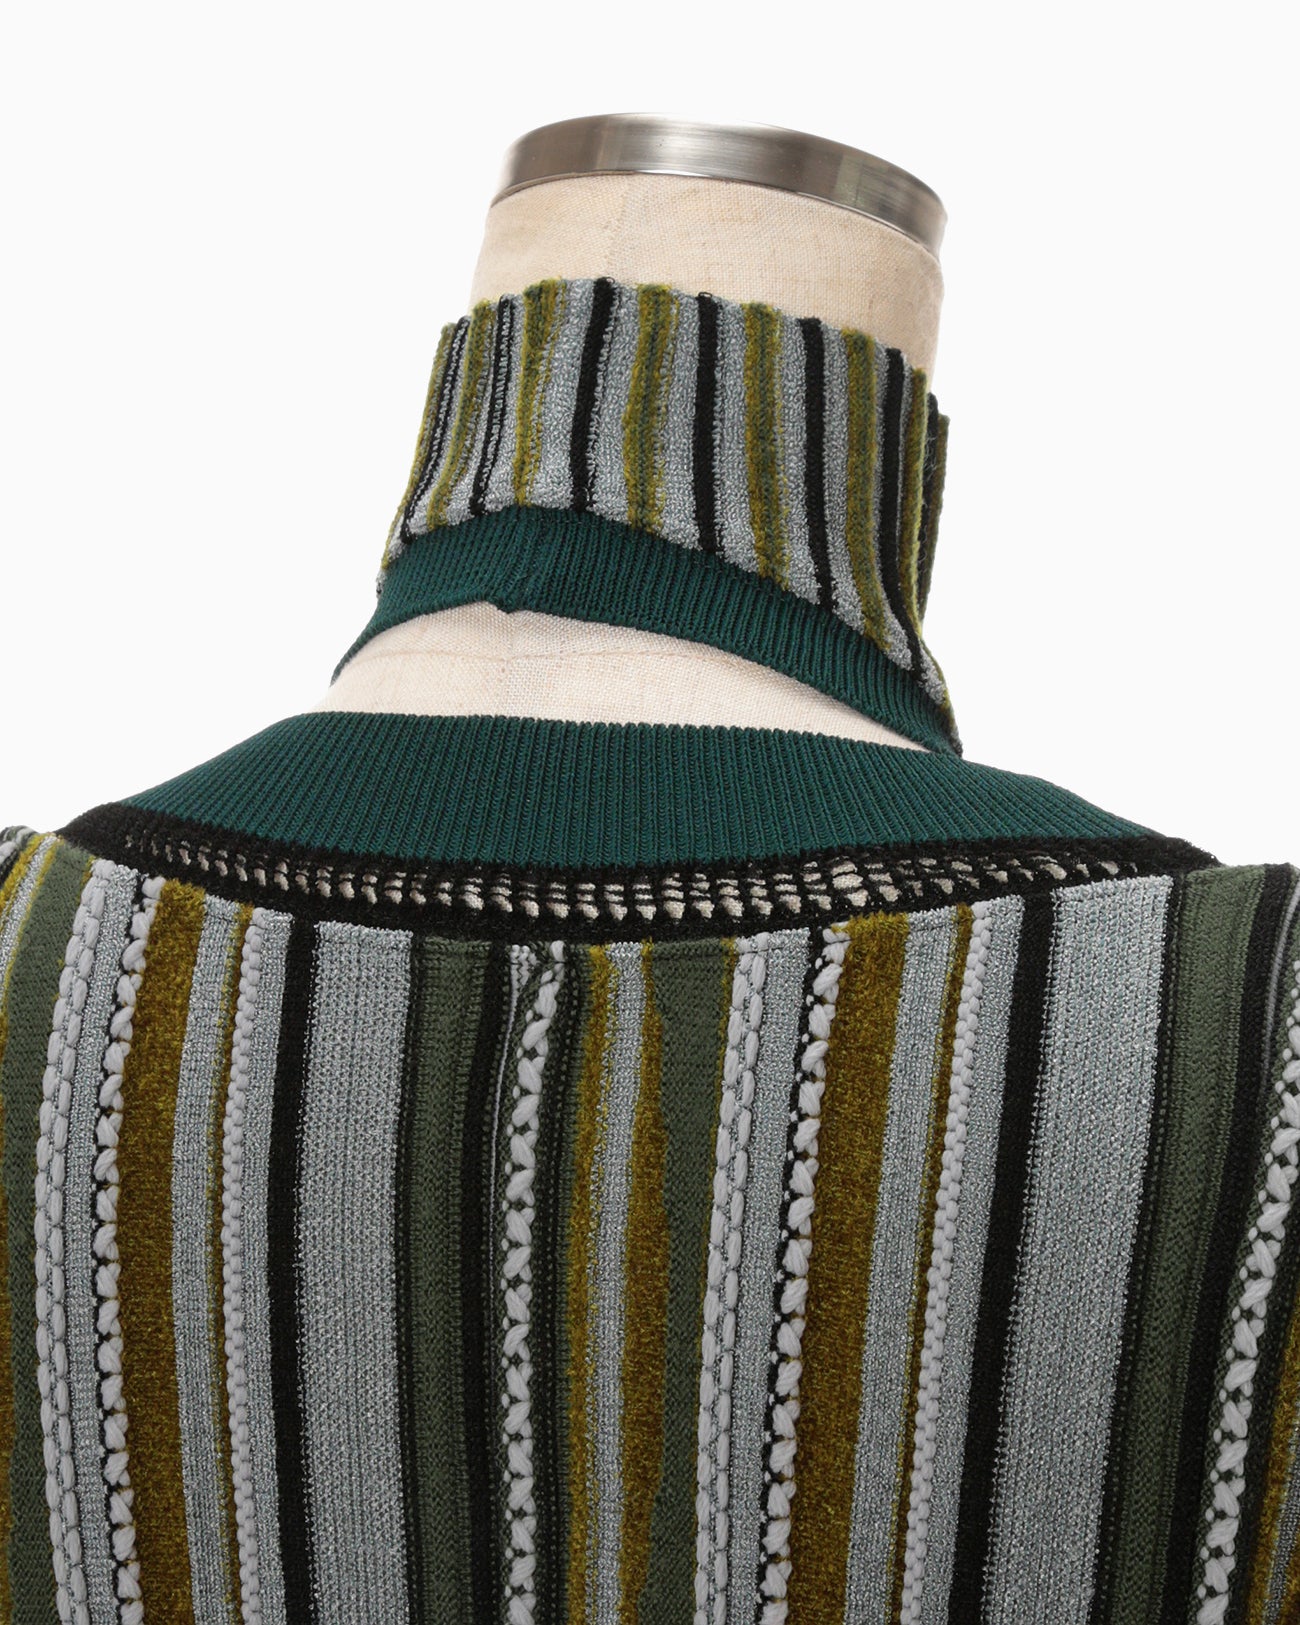 Stripe Jacquard High Neck Knitted Top - khaki